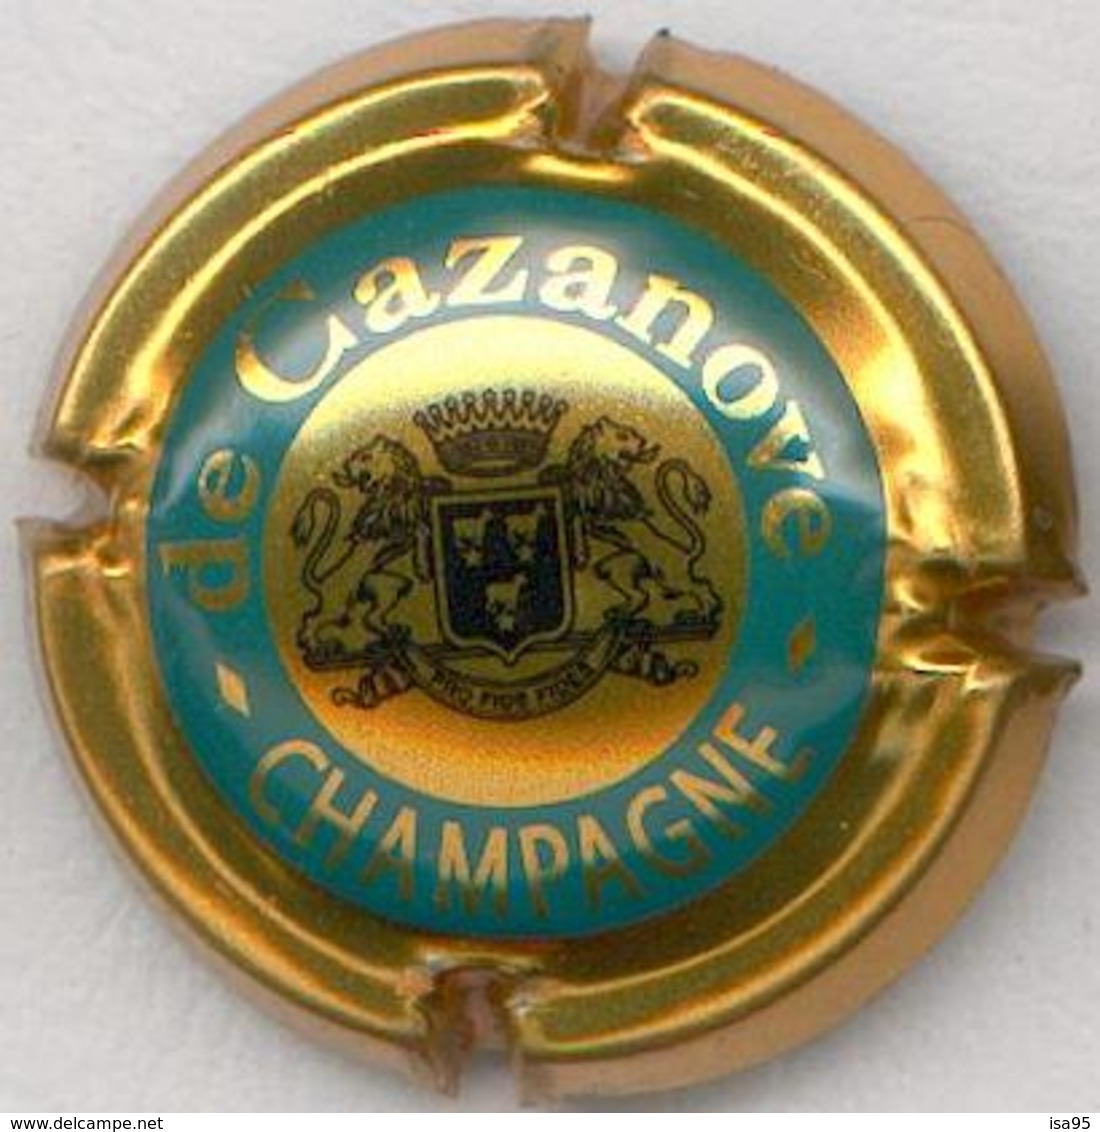 CAPSULE-CHAMPAGNE DE CAZANOVE N°14 Cercle Int. Or - De Cazanove